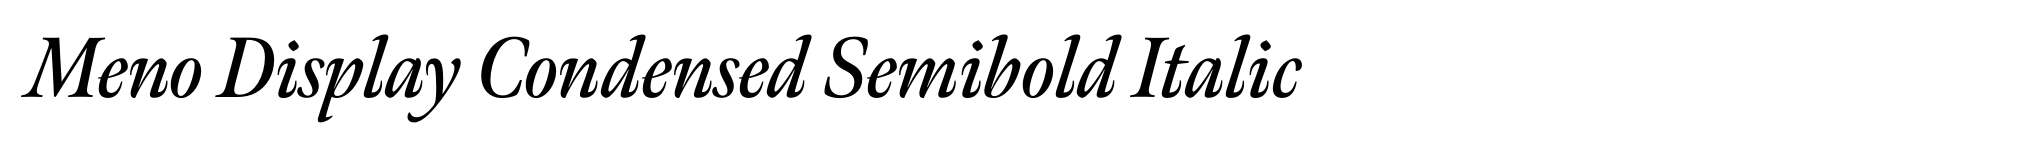 Meno Display Condensed Semibold Italic image